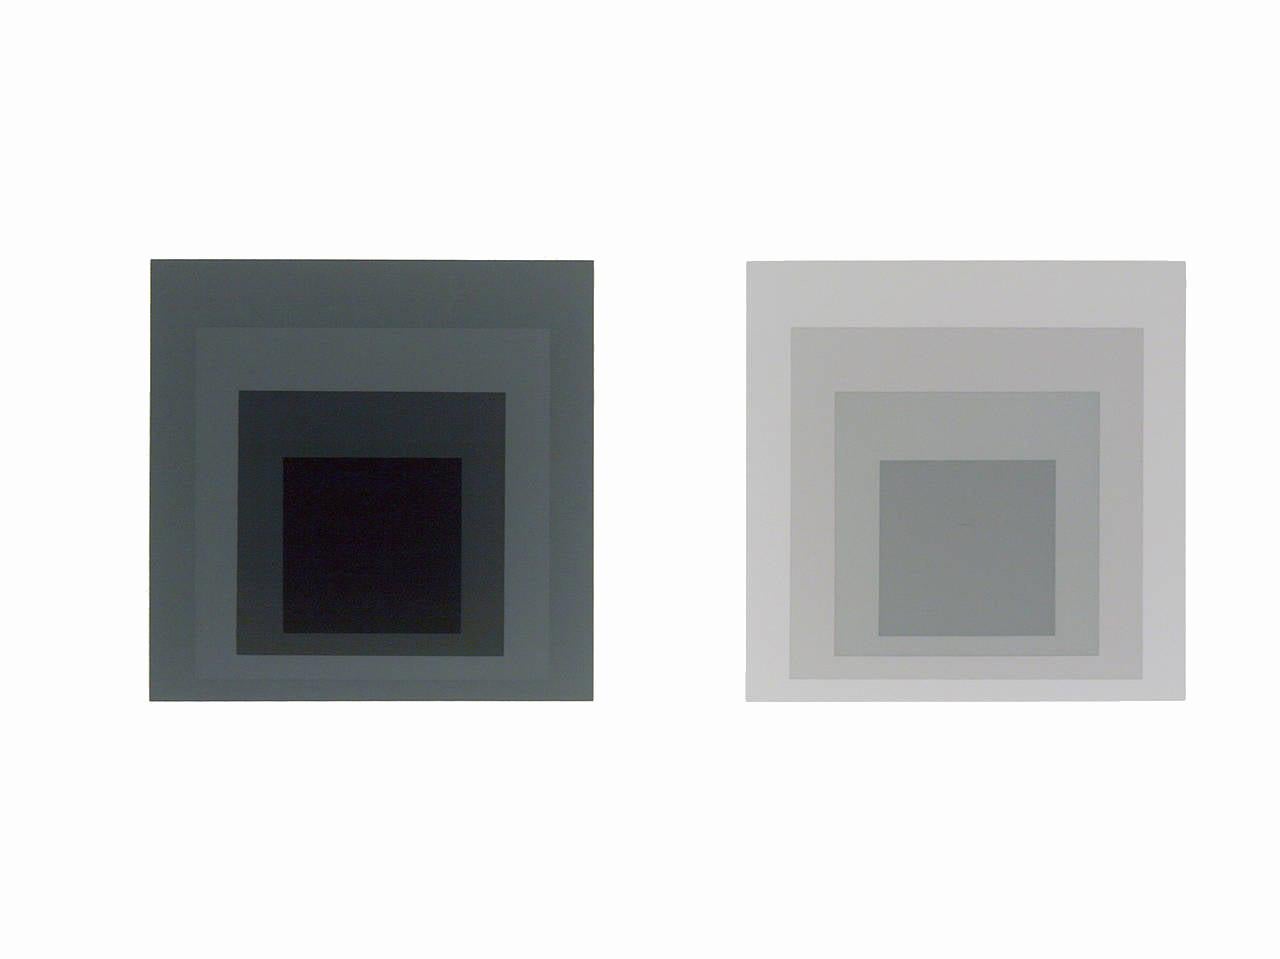 Josef Albers Abstract Print - Formulation : Articulation, Portfolio I Folder 23 (A) "Homage to the Square"